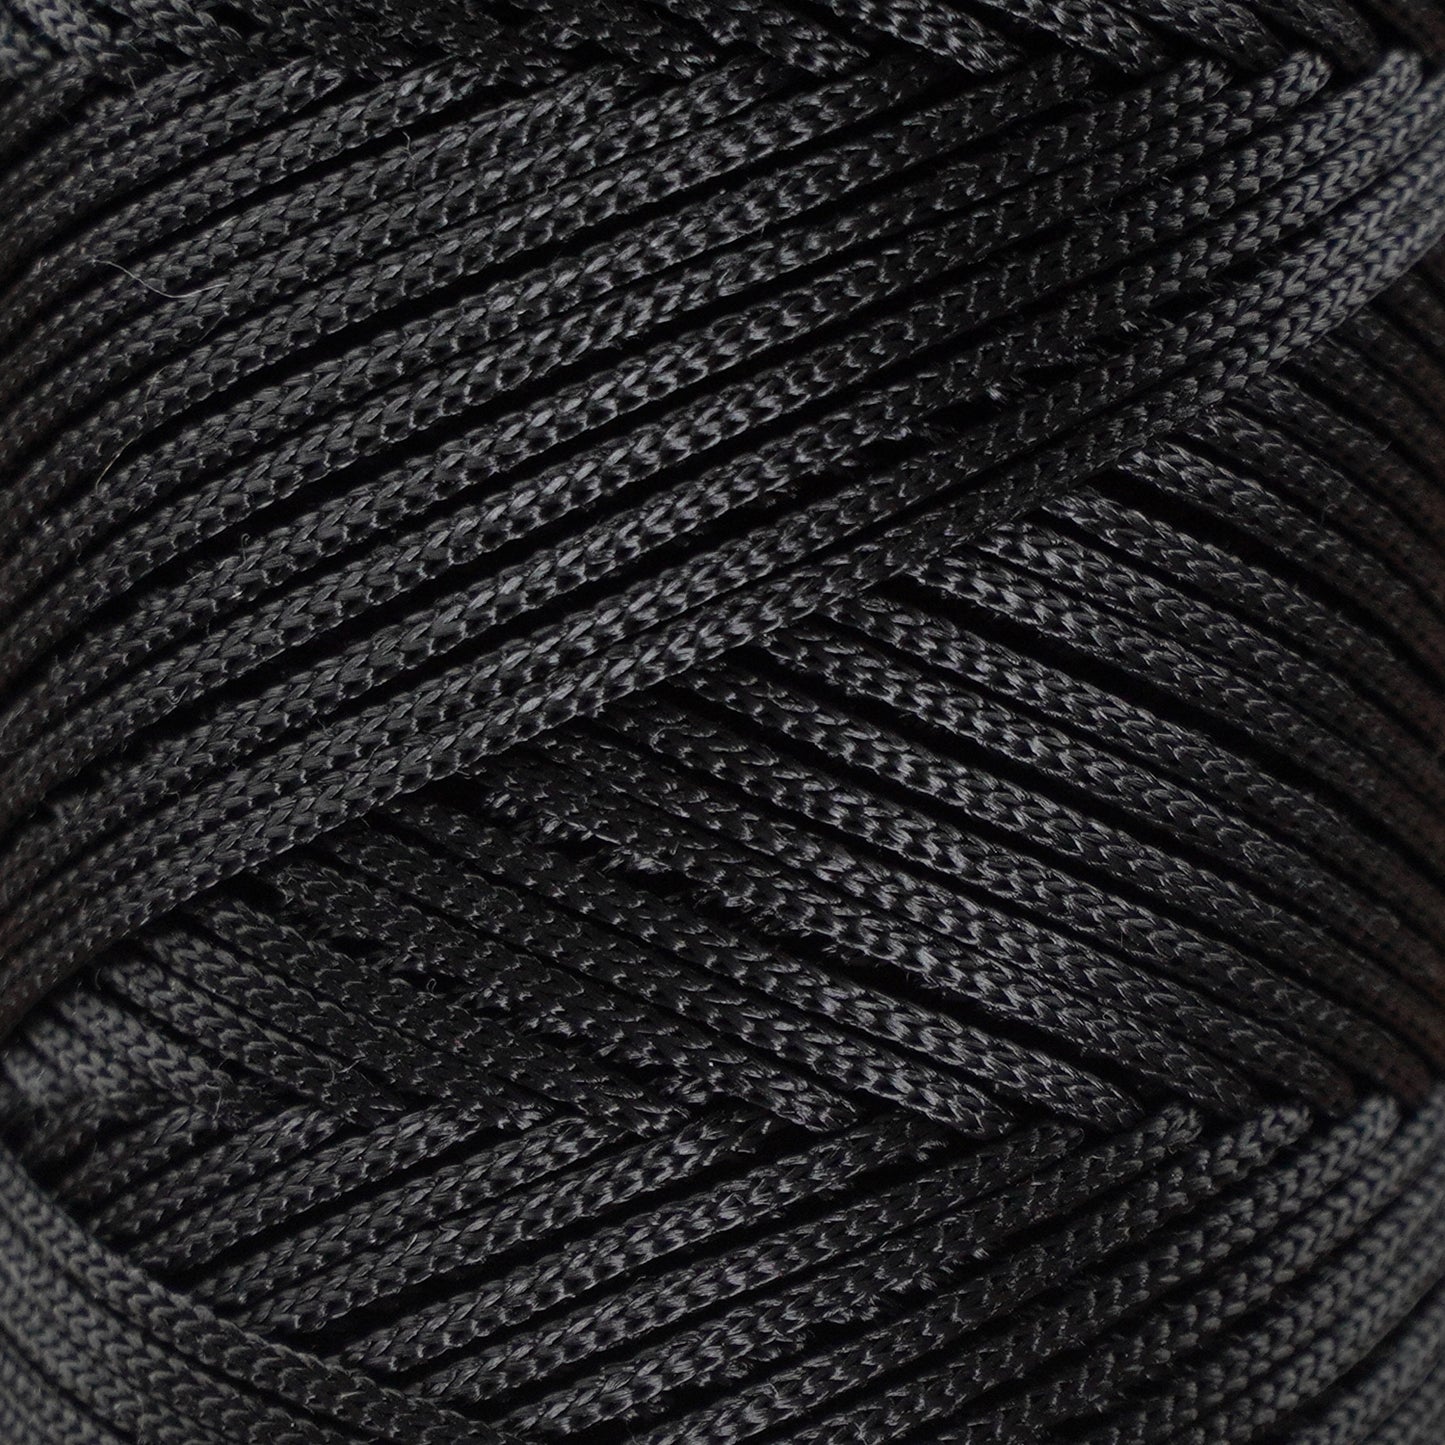 Polyester Macrame Cord 2mm x 125 Yards (375 feet) 2mm Polypropylene - Black